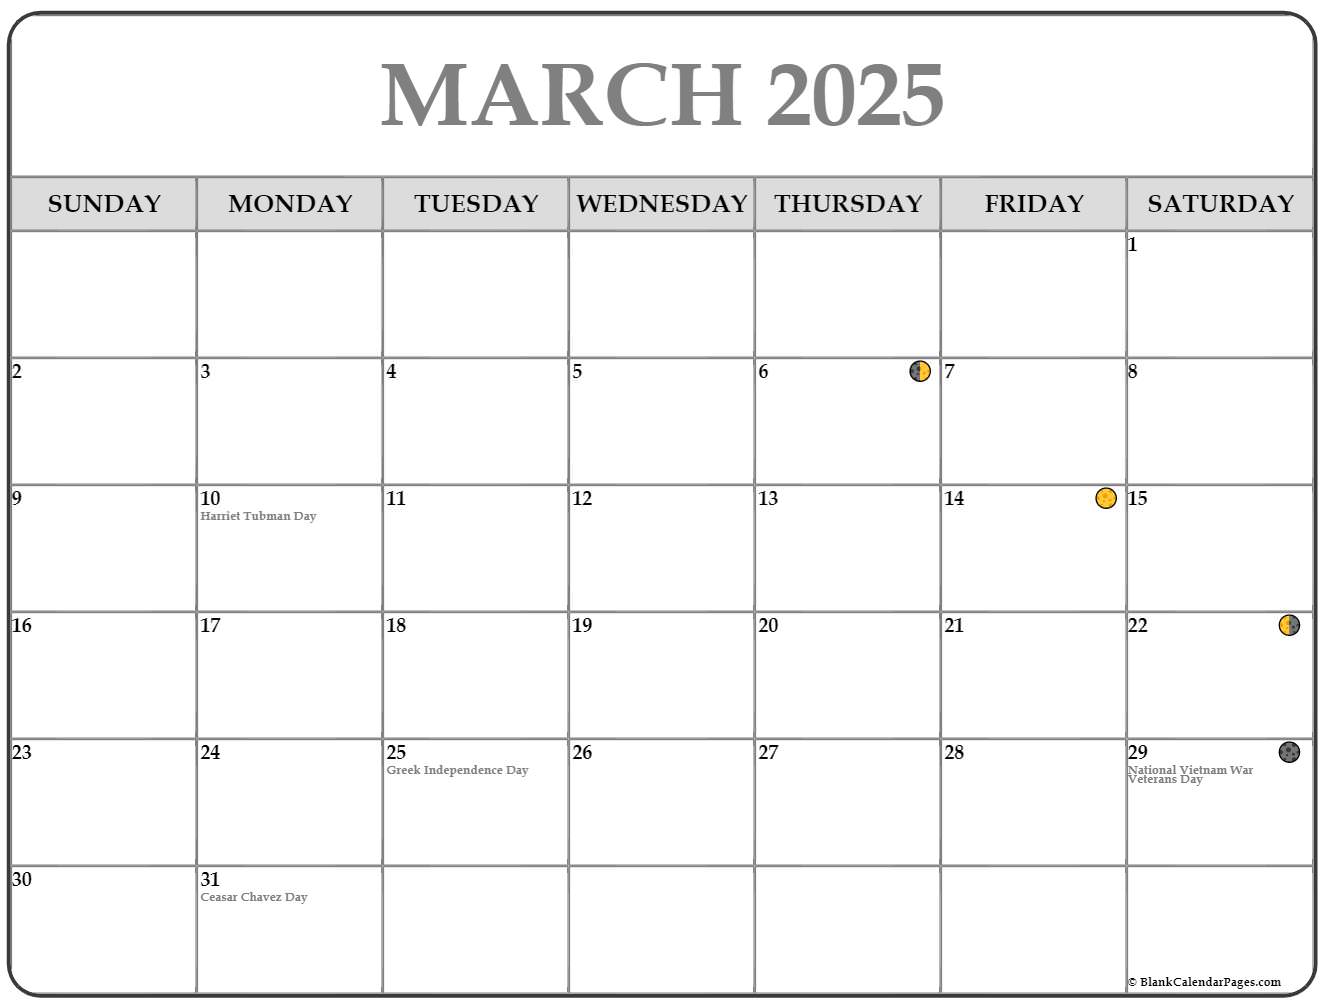 march-2025-lunar-calendar-moon-phase-calendar